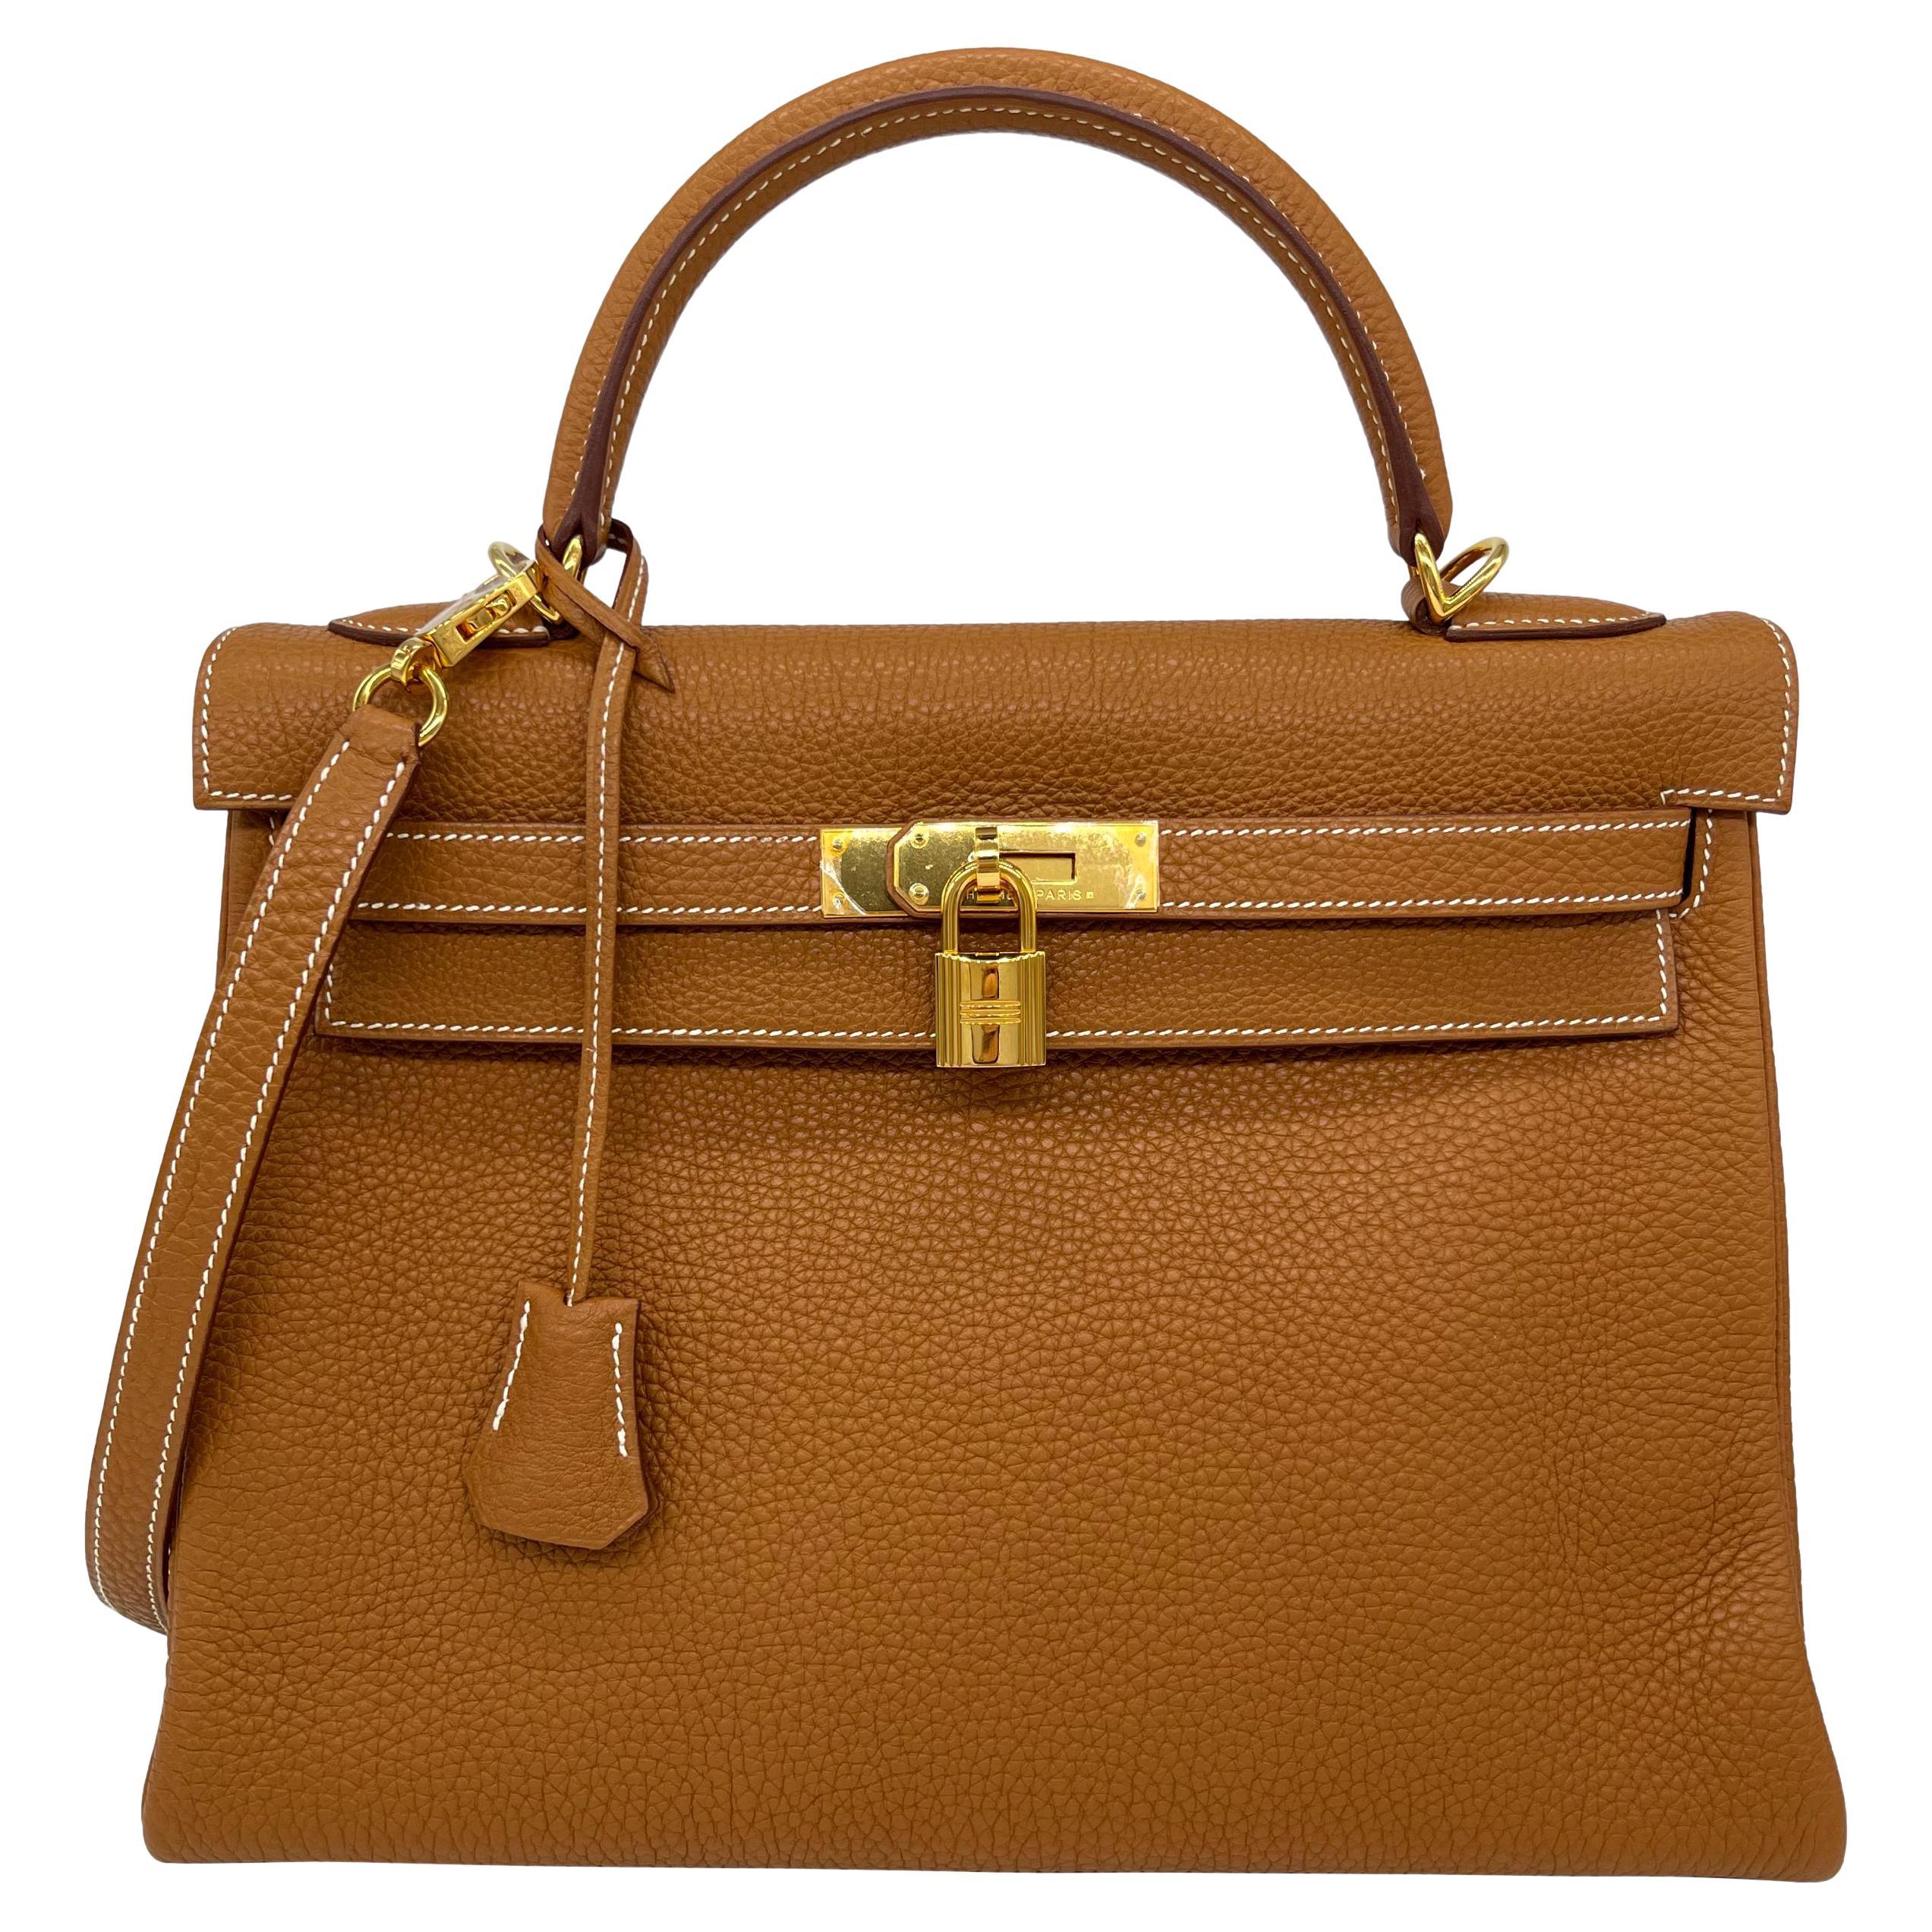 Hermès Natural Clemence Retourne Kelly Handbag with Gold Hardware 32cm, 2007.